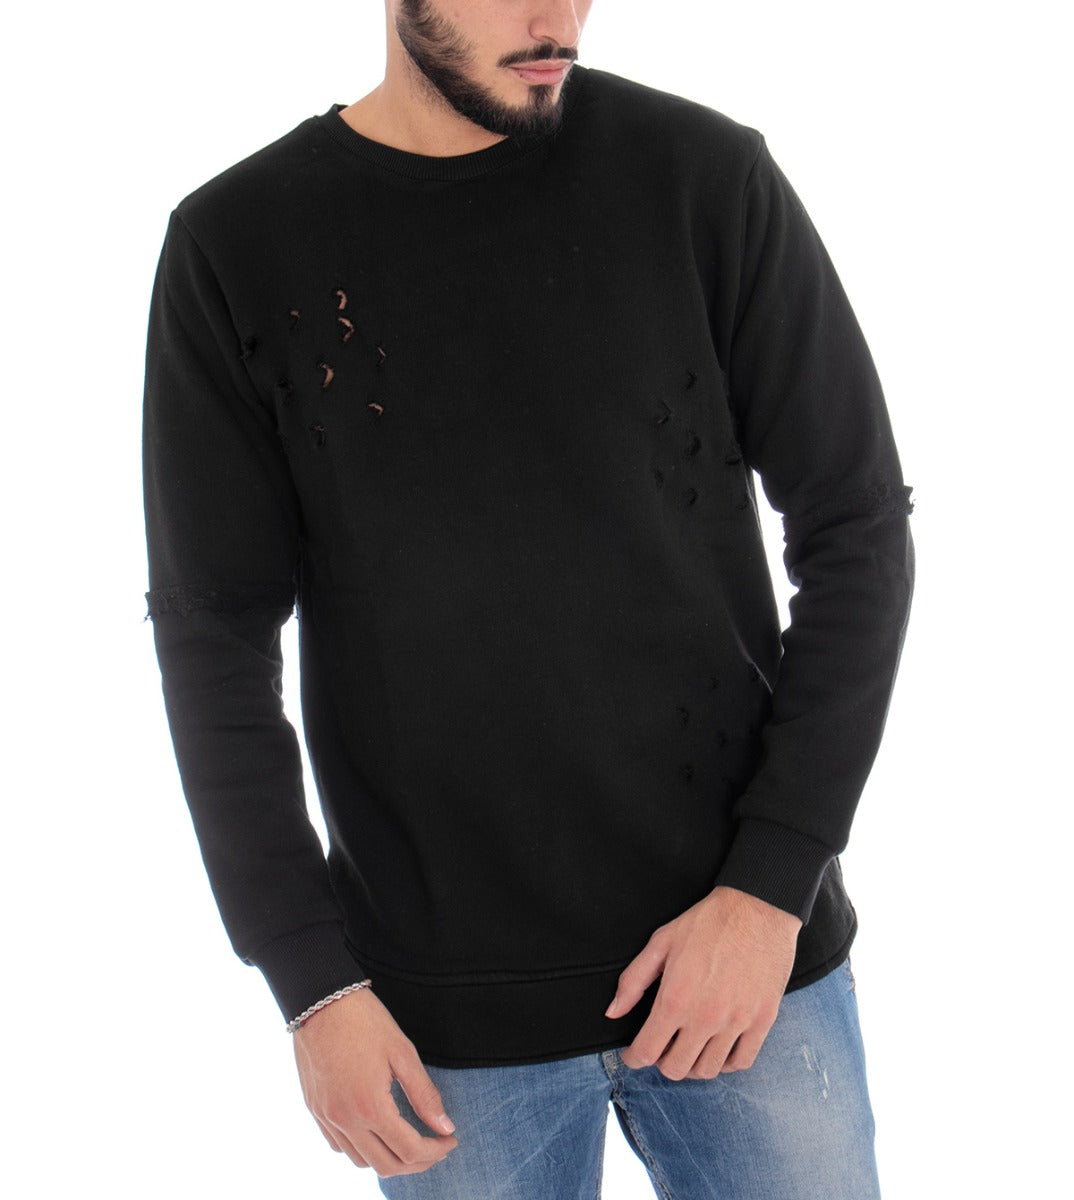 Men's Crewneck Sweatshirt Solid Color Basic Black with Holes GIOSAL-F2172A